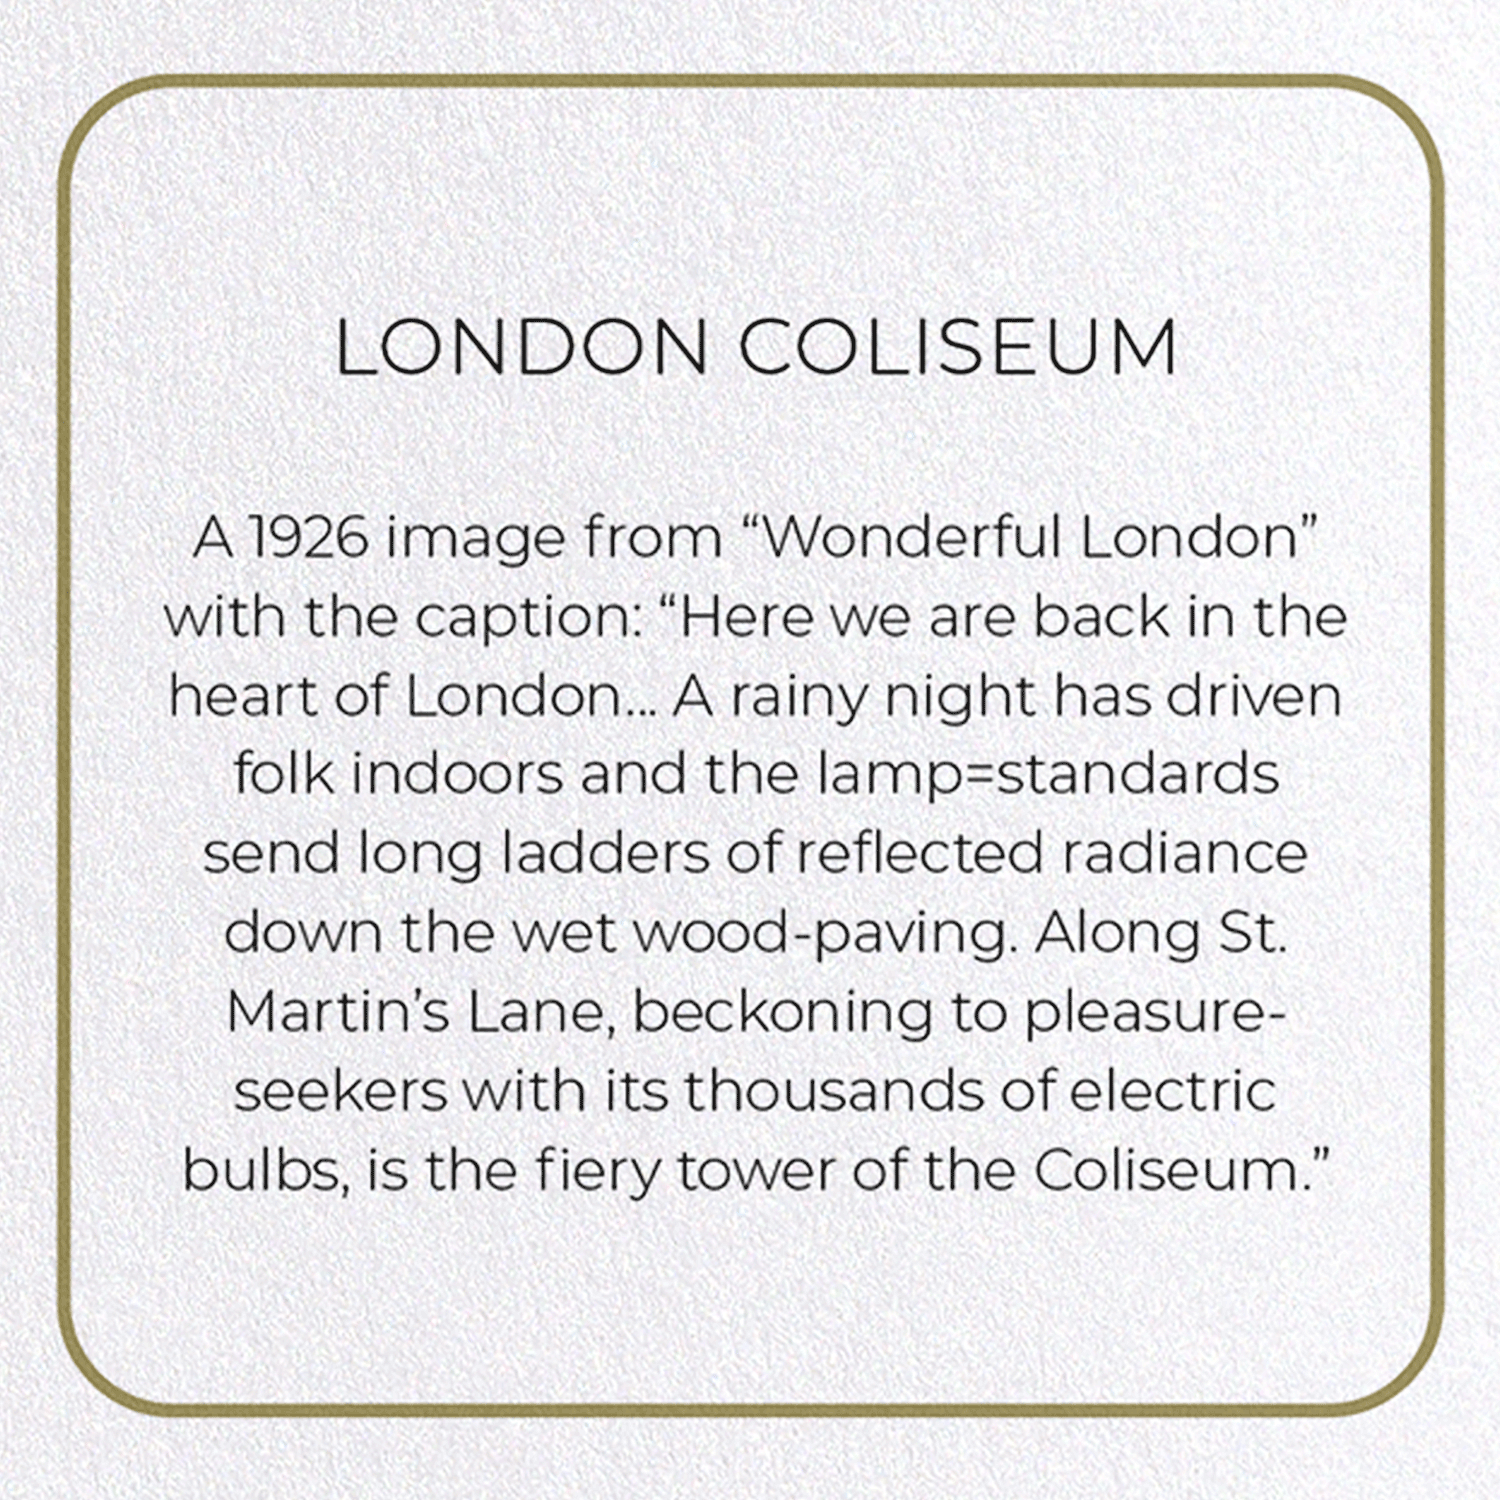 LONDON COLISEUM: Photo Greeting Card